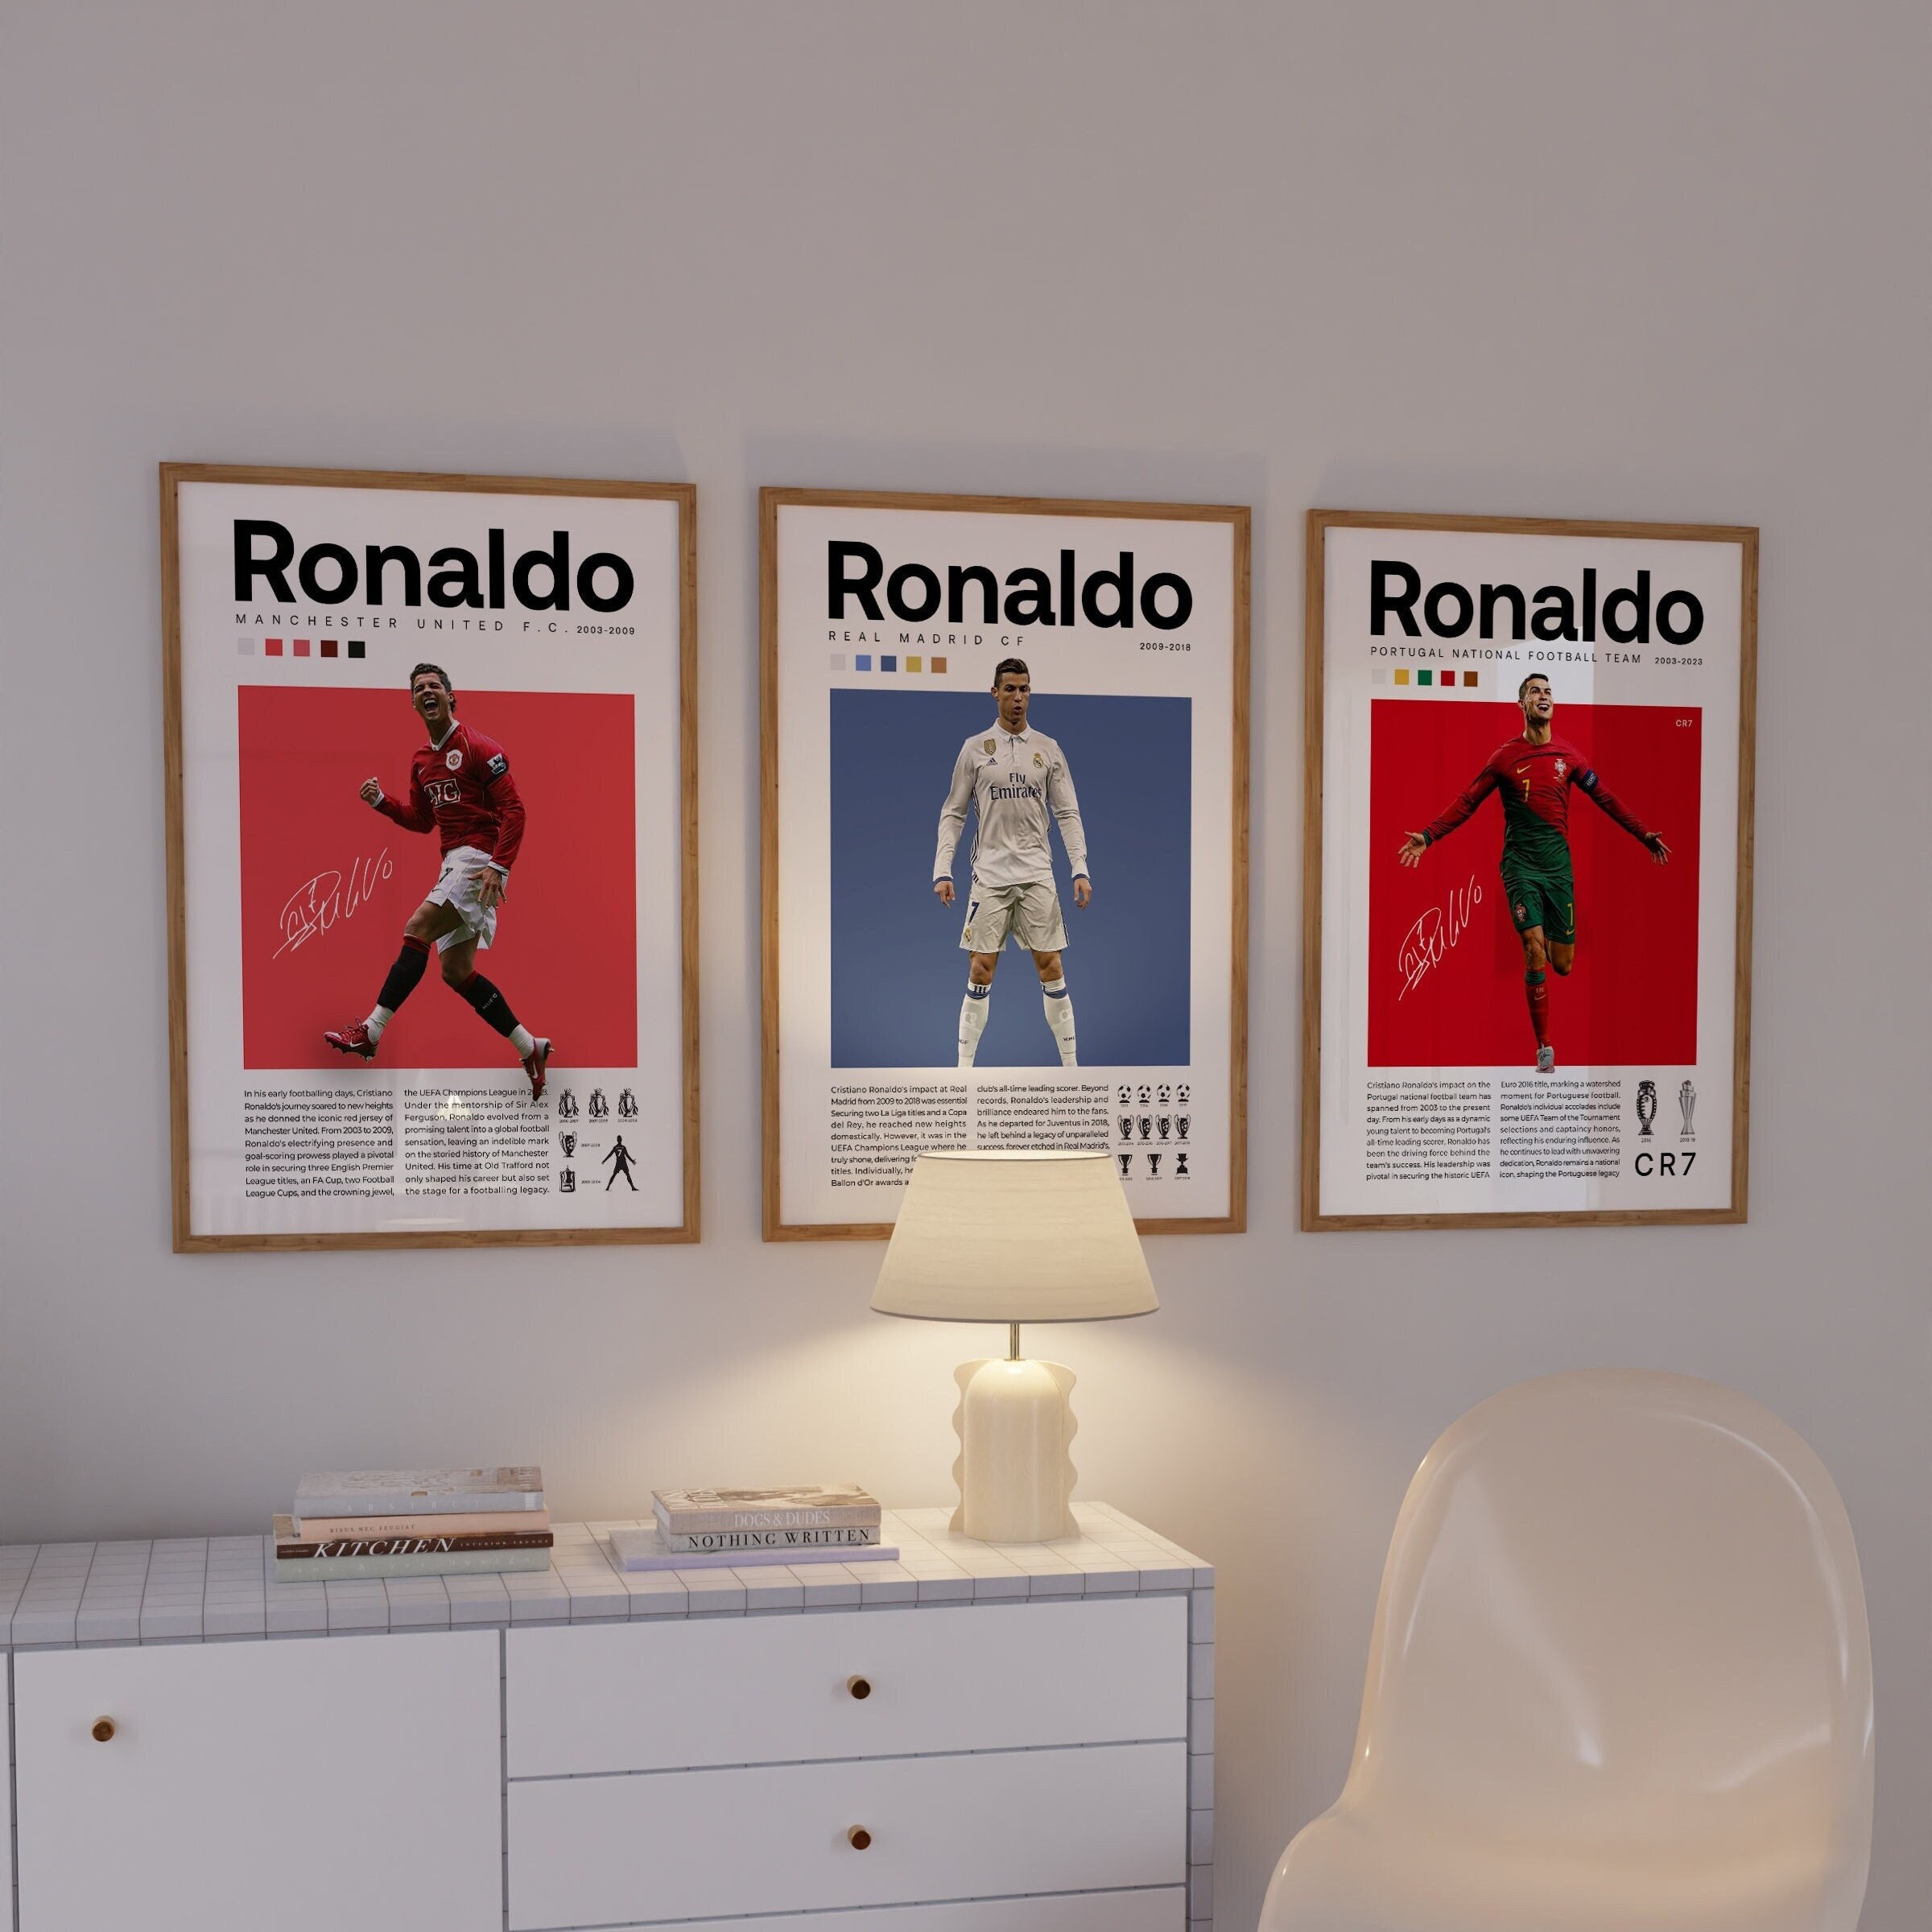 Poster Inspired By Cristiano Ronaldo #35 Motivation Life Football